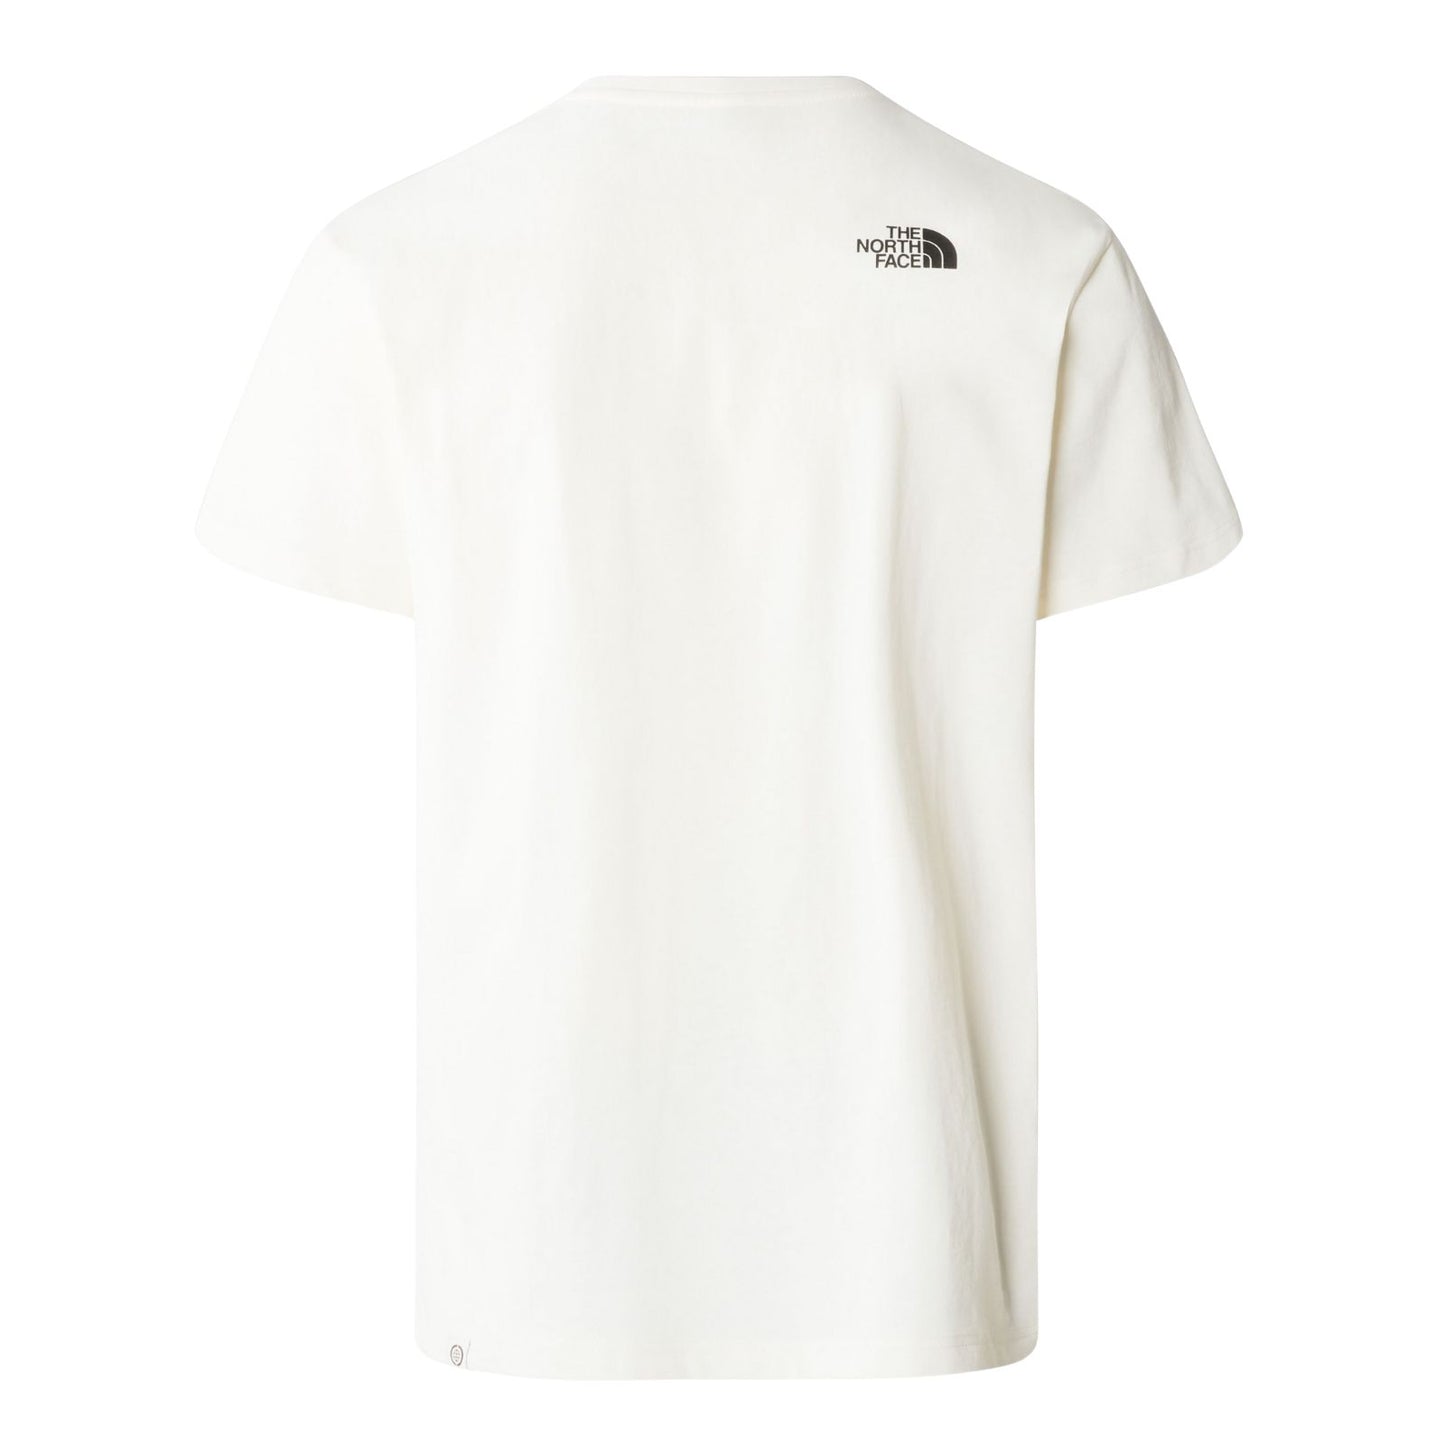 The North Face Berkeley California Short Sleeve T-Shirt - In Scrap White Dune/Optic Emerald. Foto da parte de trás.